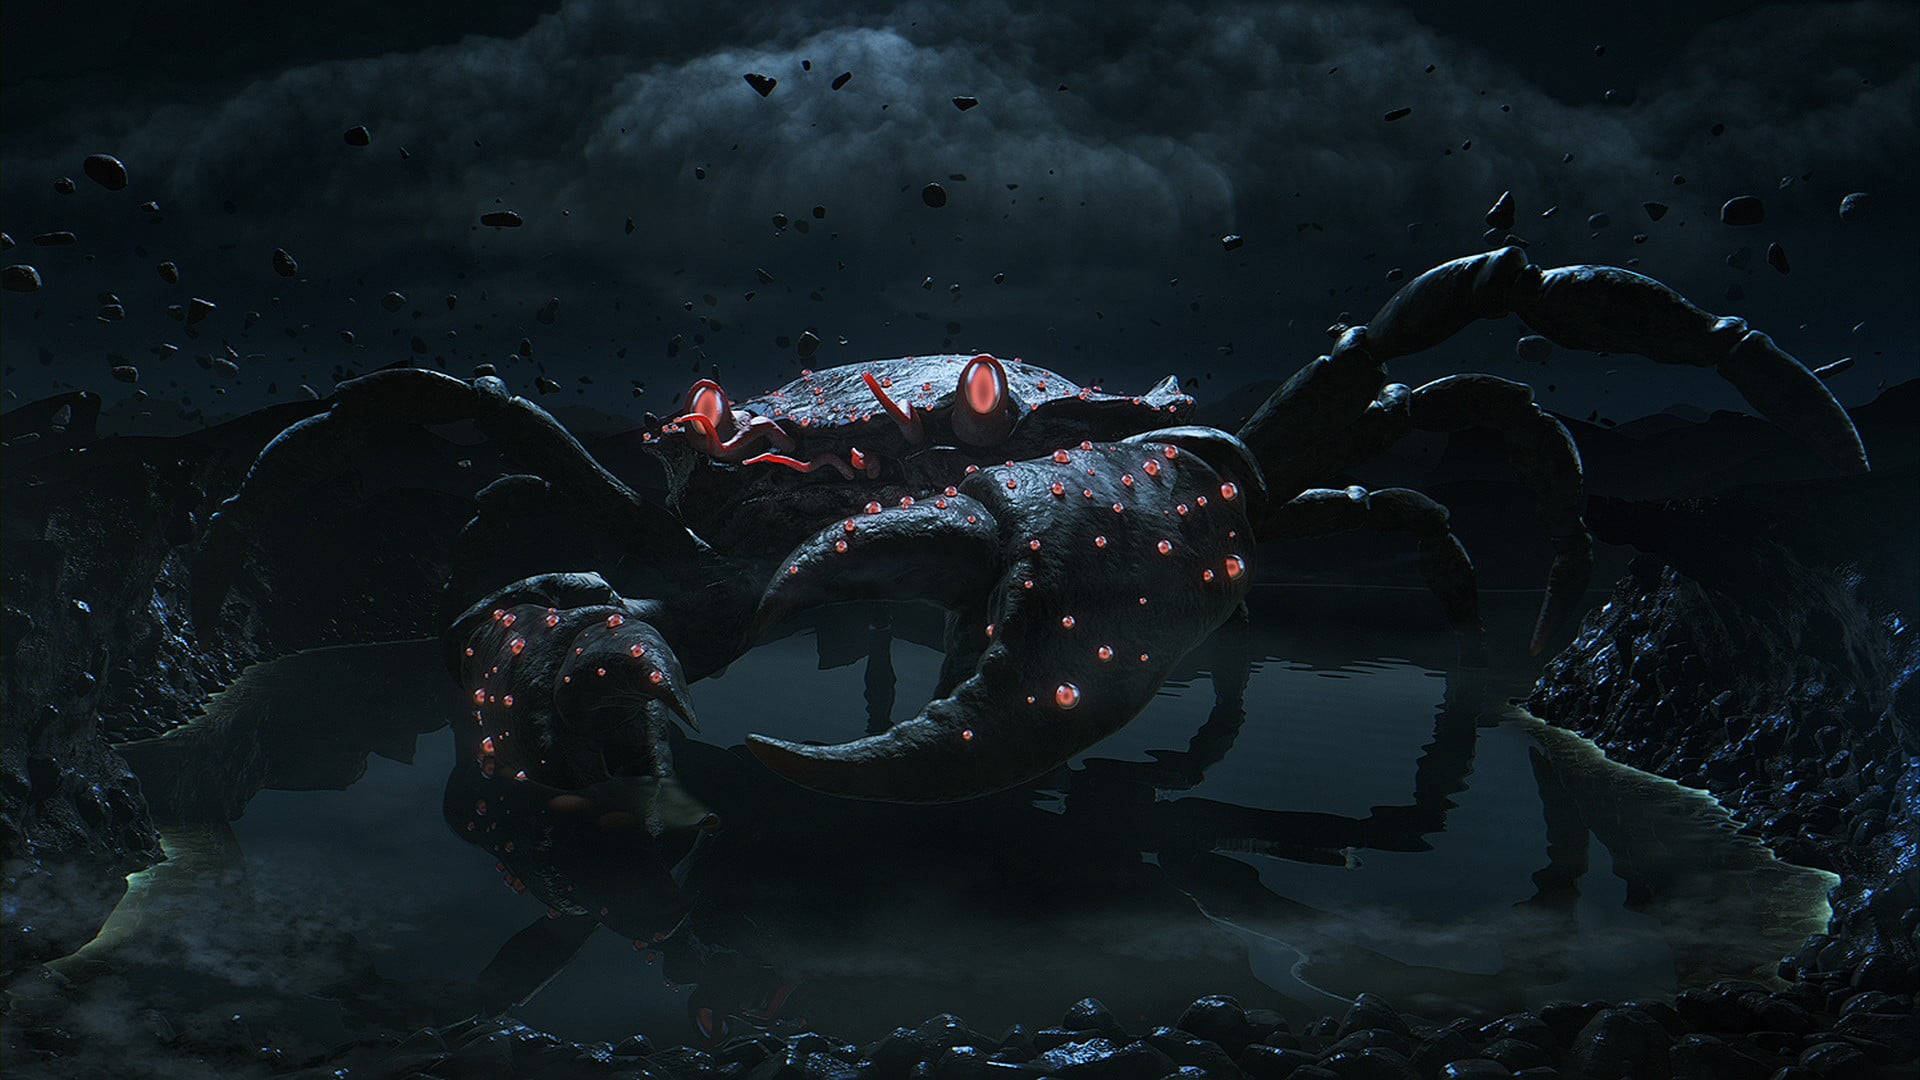 Red-eyed Black Monster Crab Background